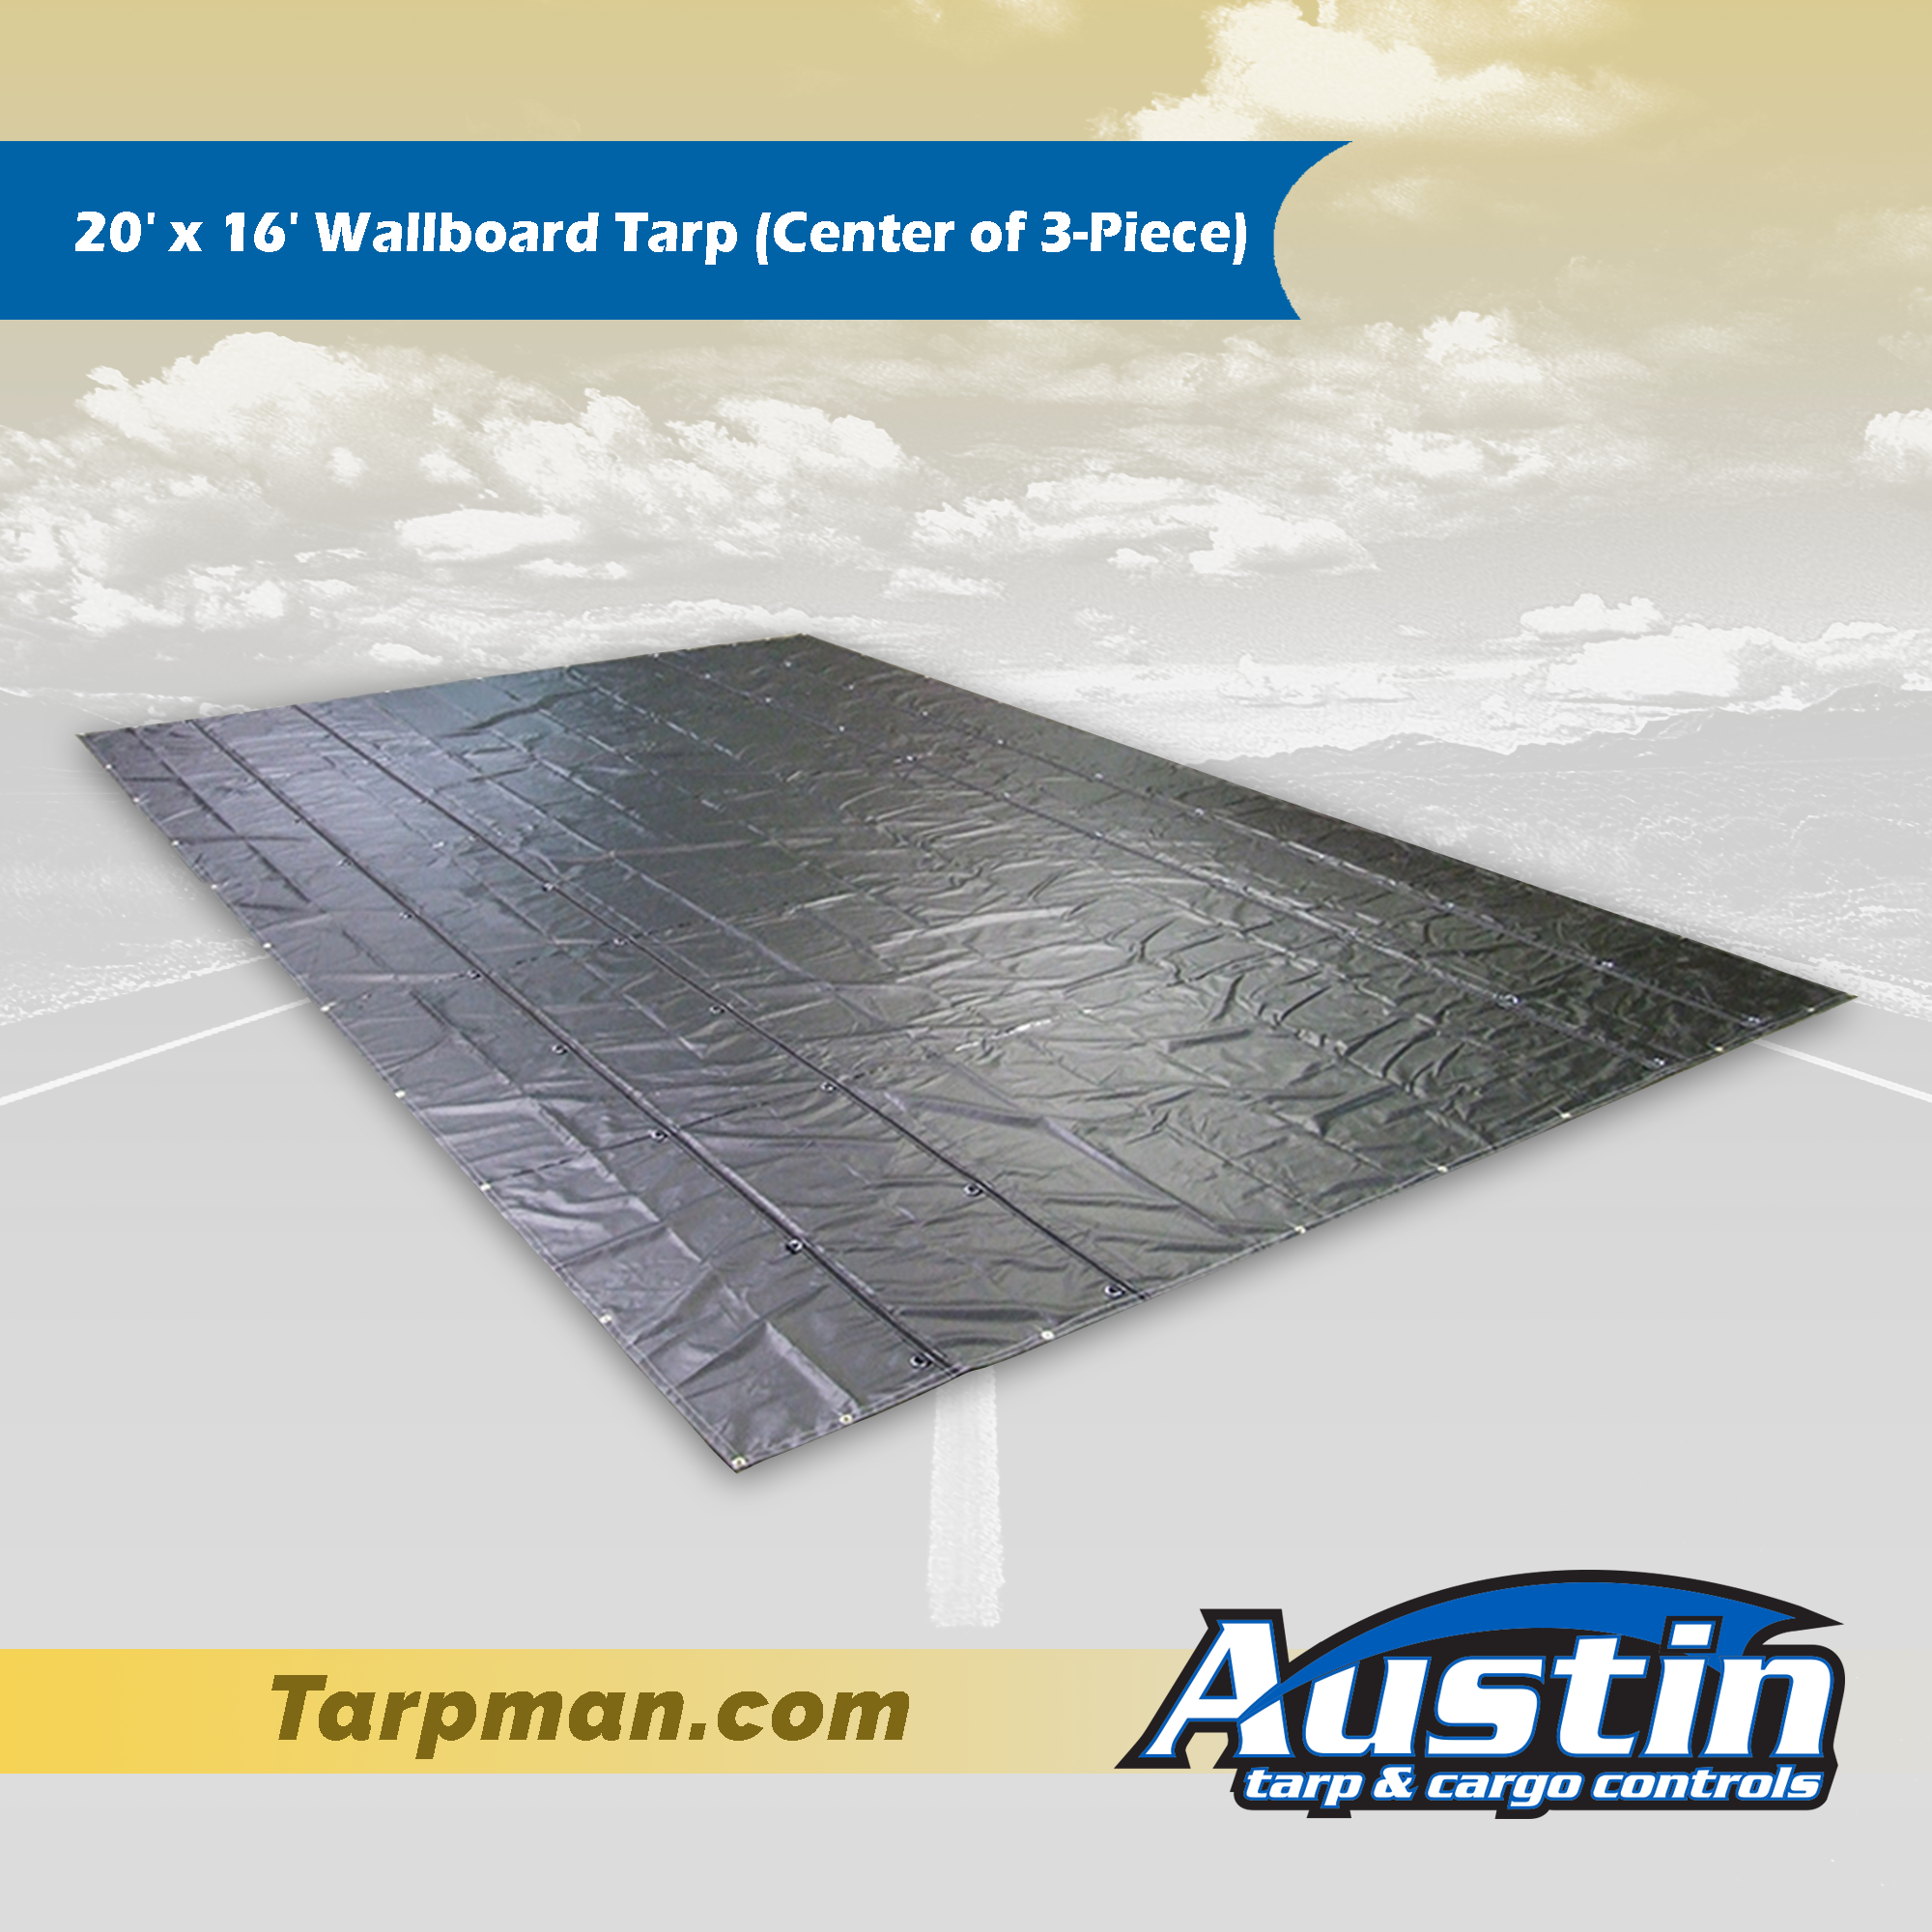 20' x 16' Wallboard Tarp (Center of 3-Piece) Tarpman.com | Austin Tarp & Cargo Controls